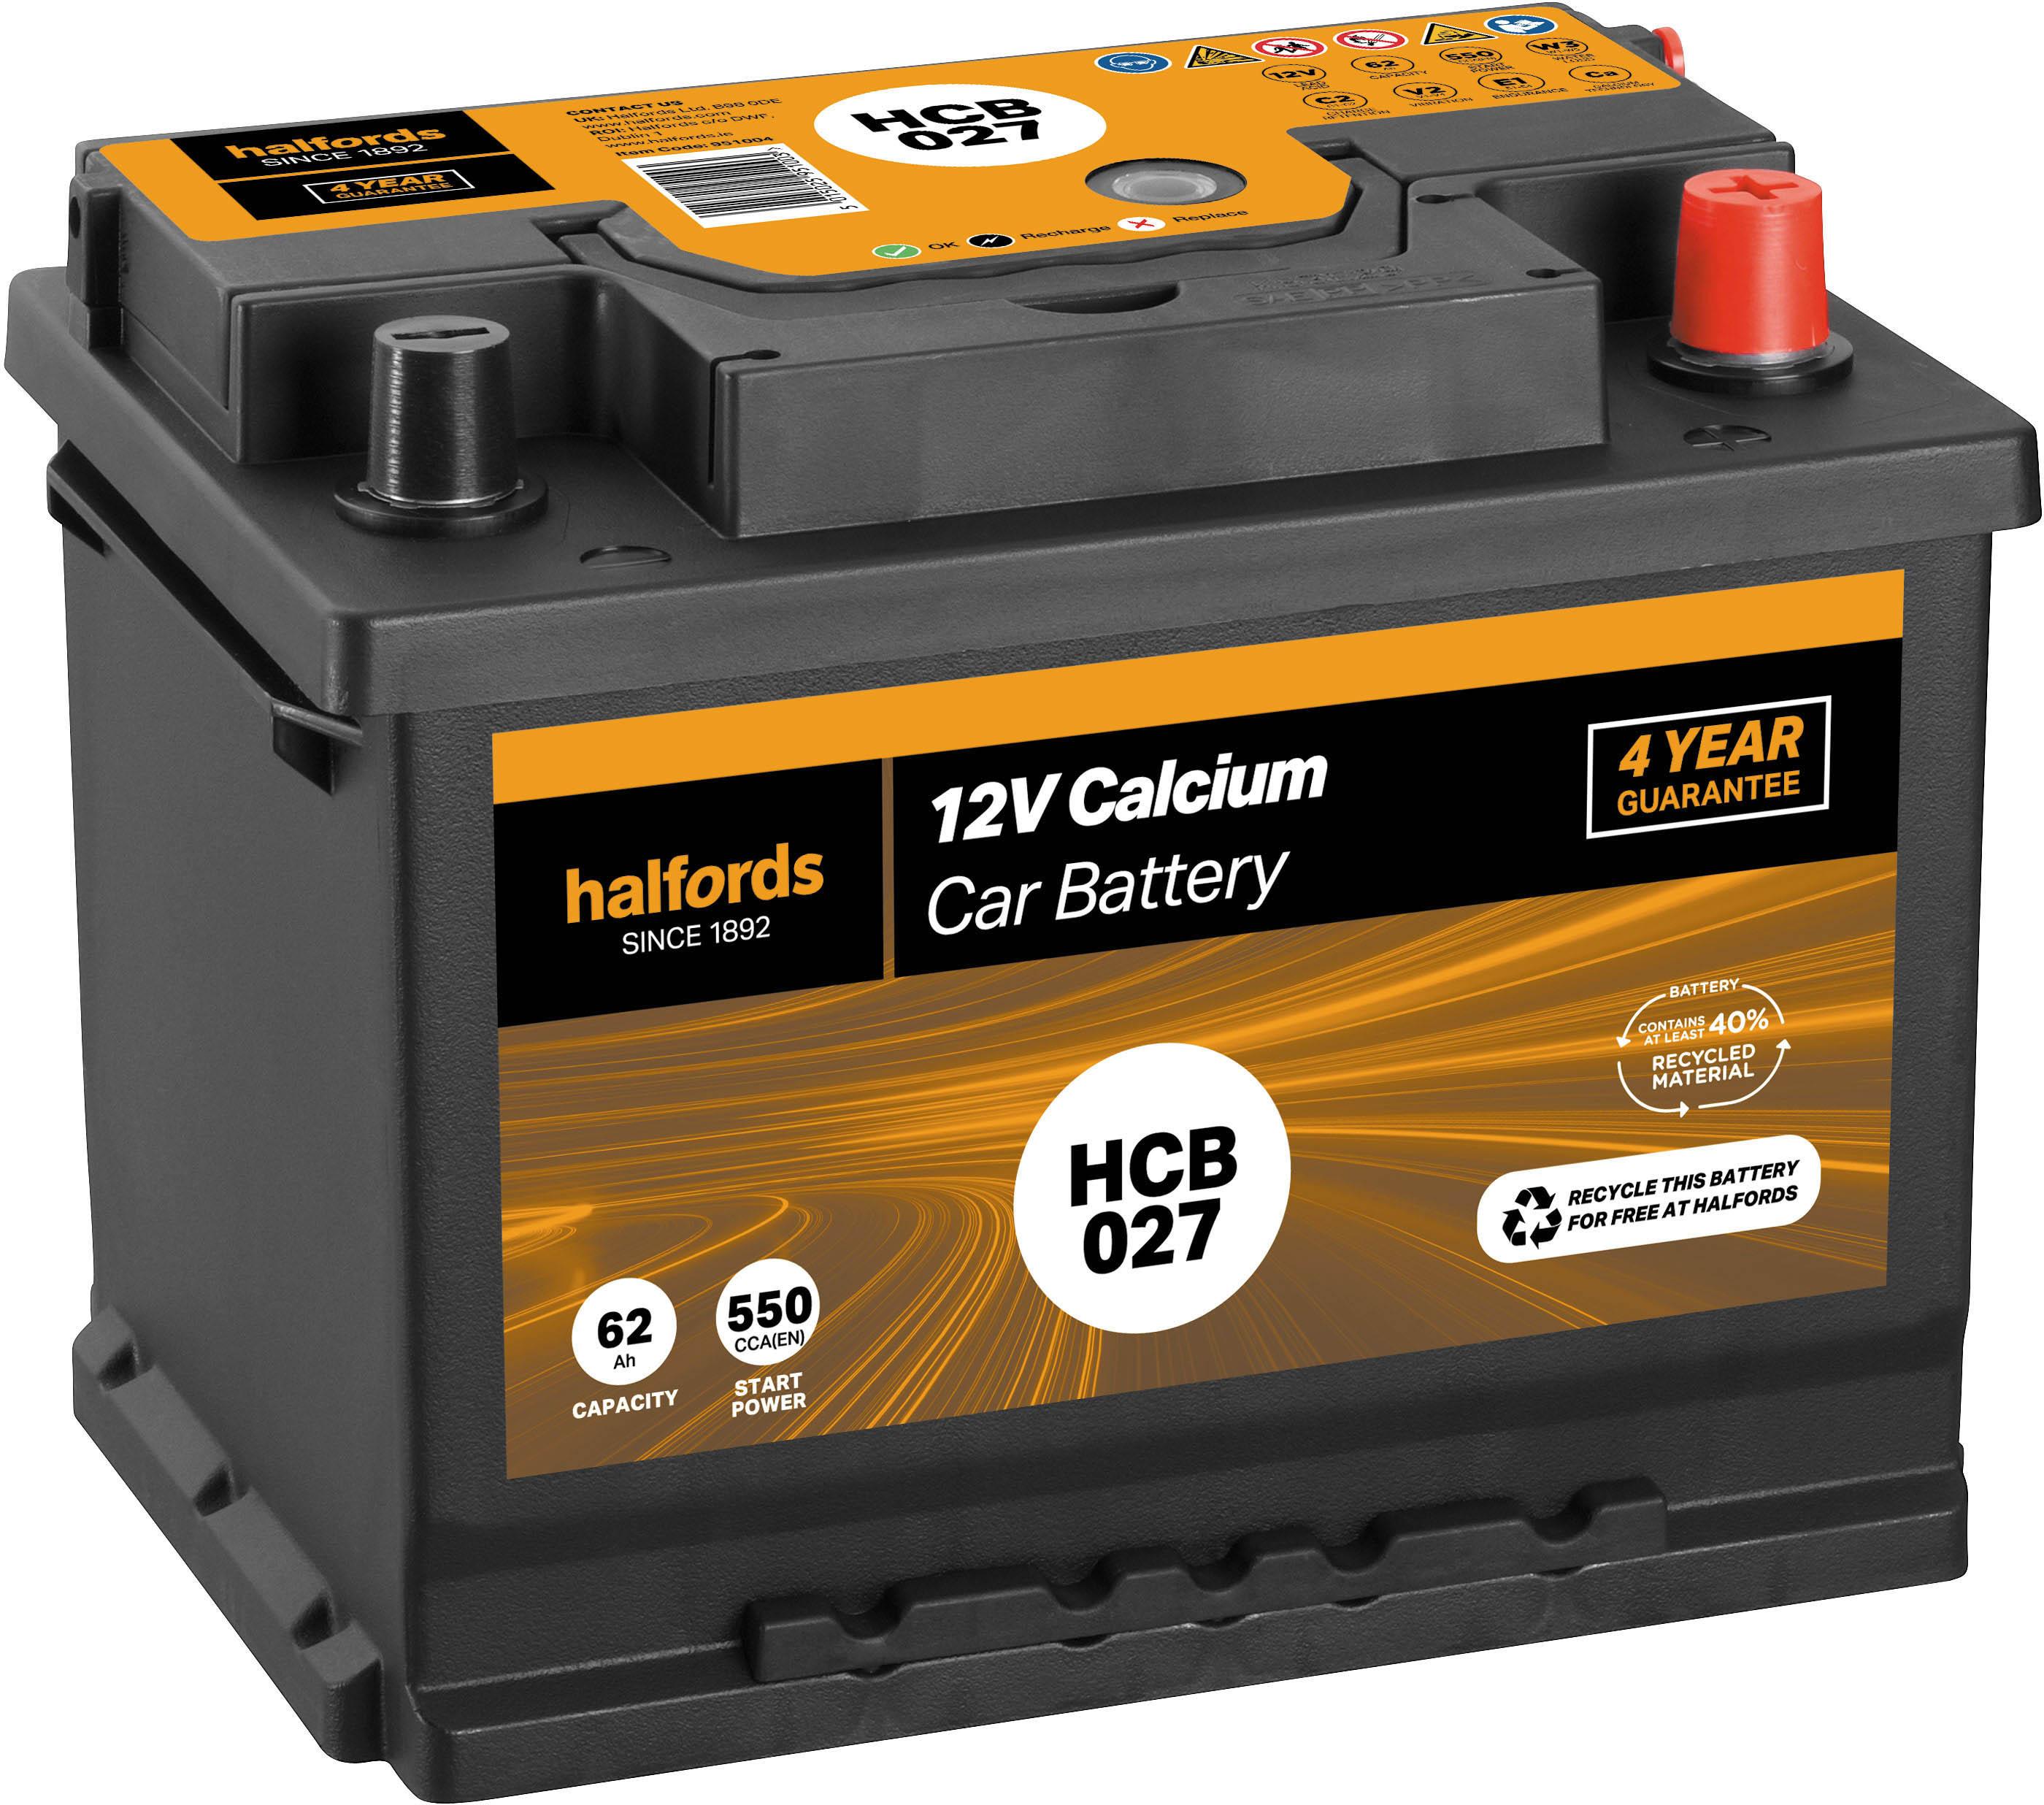 Halfords Hcb013 Calcium 12V Car Battery 4 Year Guarantee